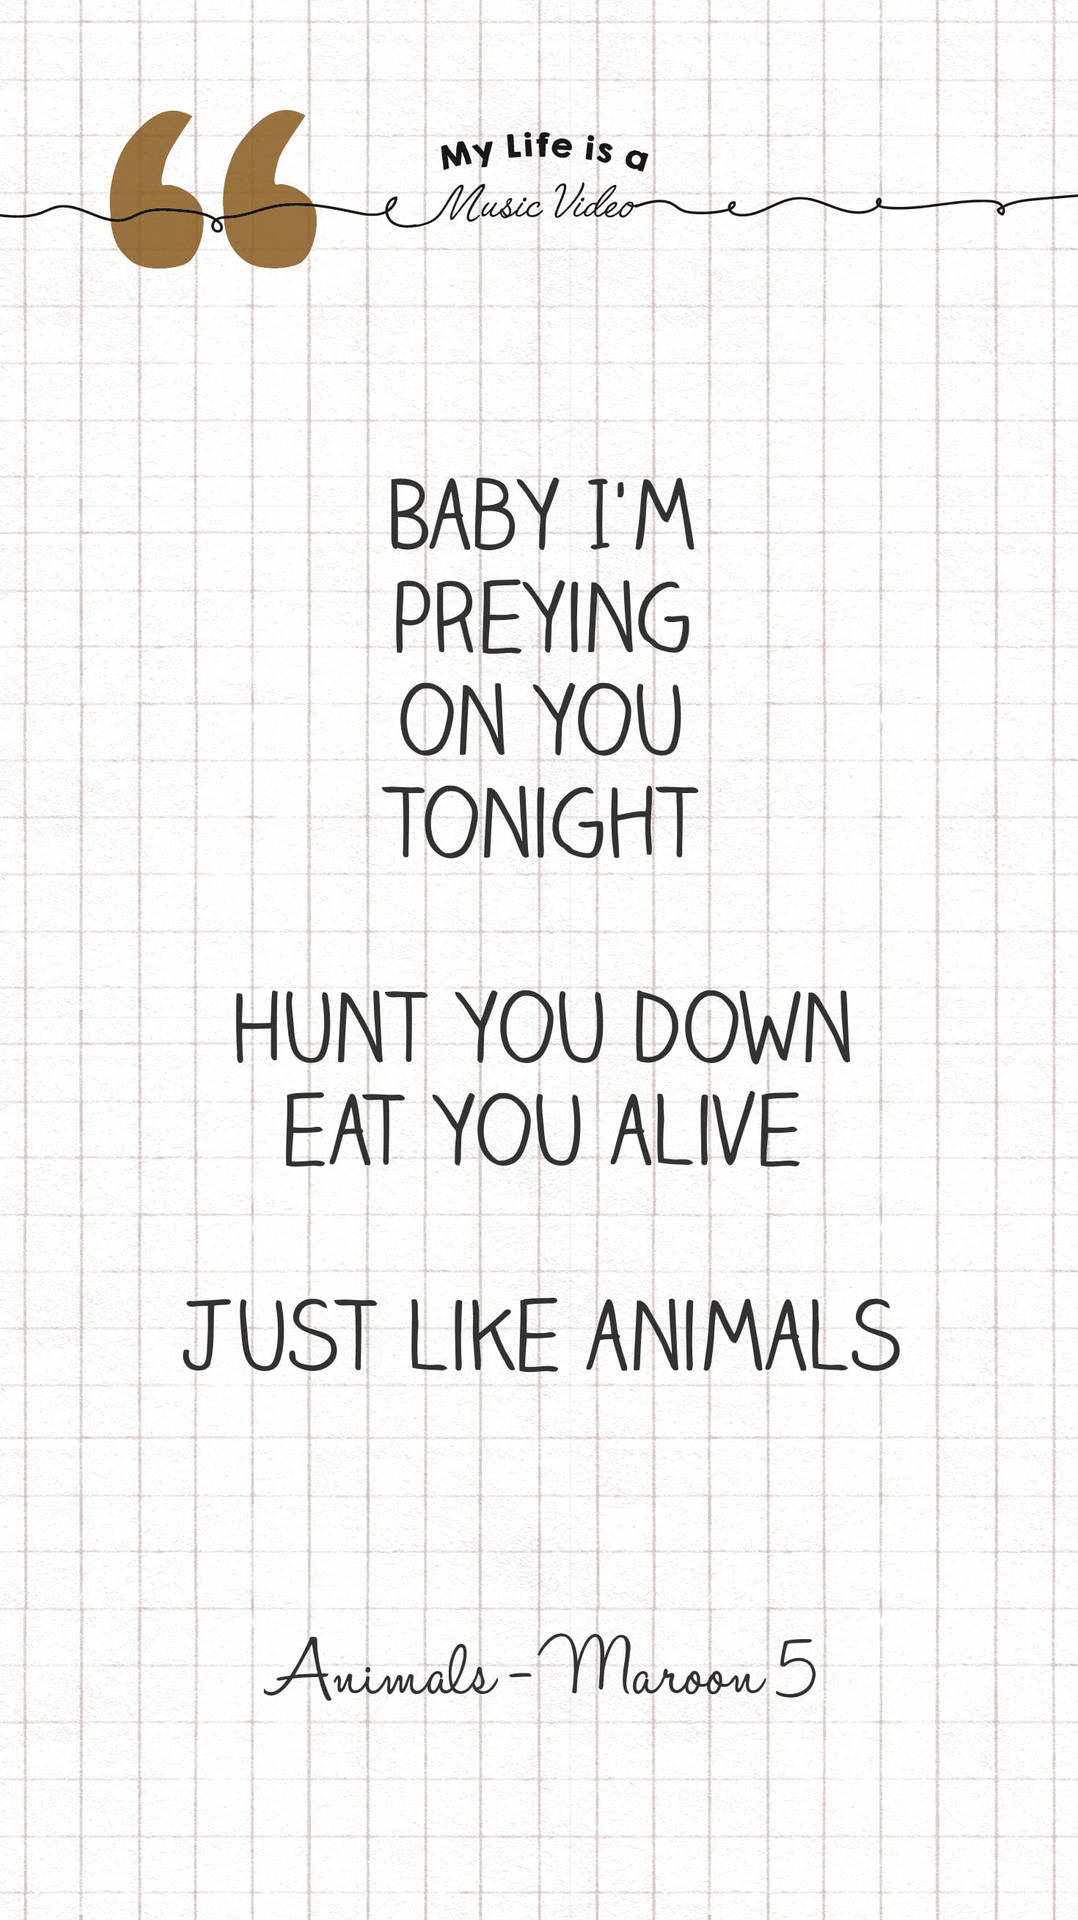 Download Maroon 5 Animals Lyrics Poster Wallpaper 